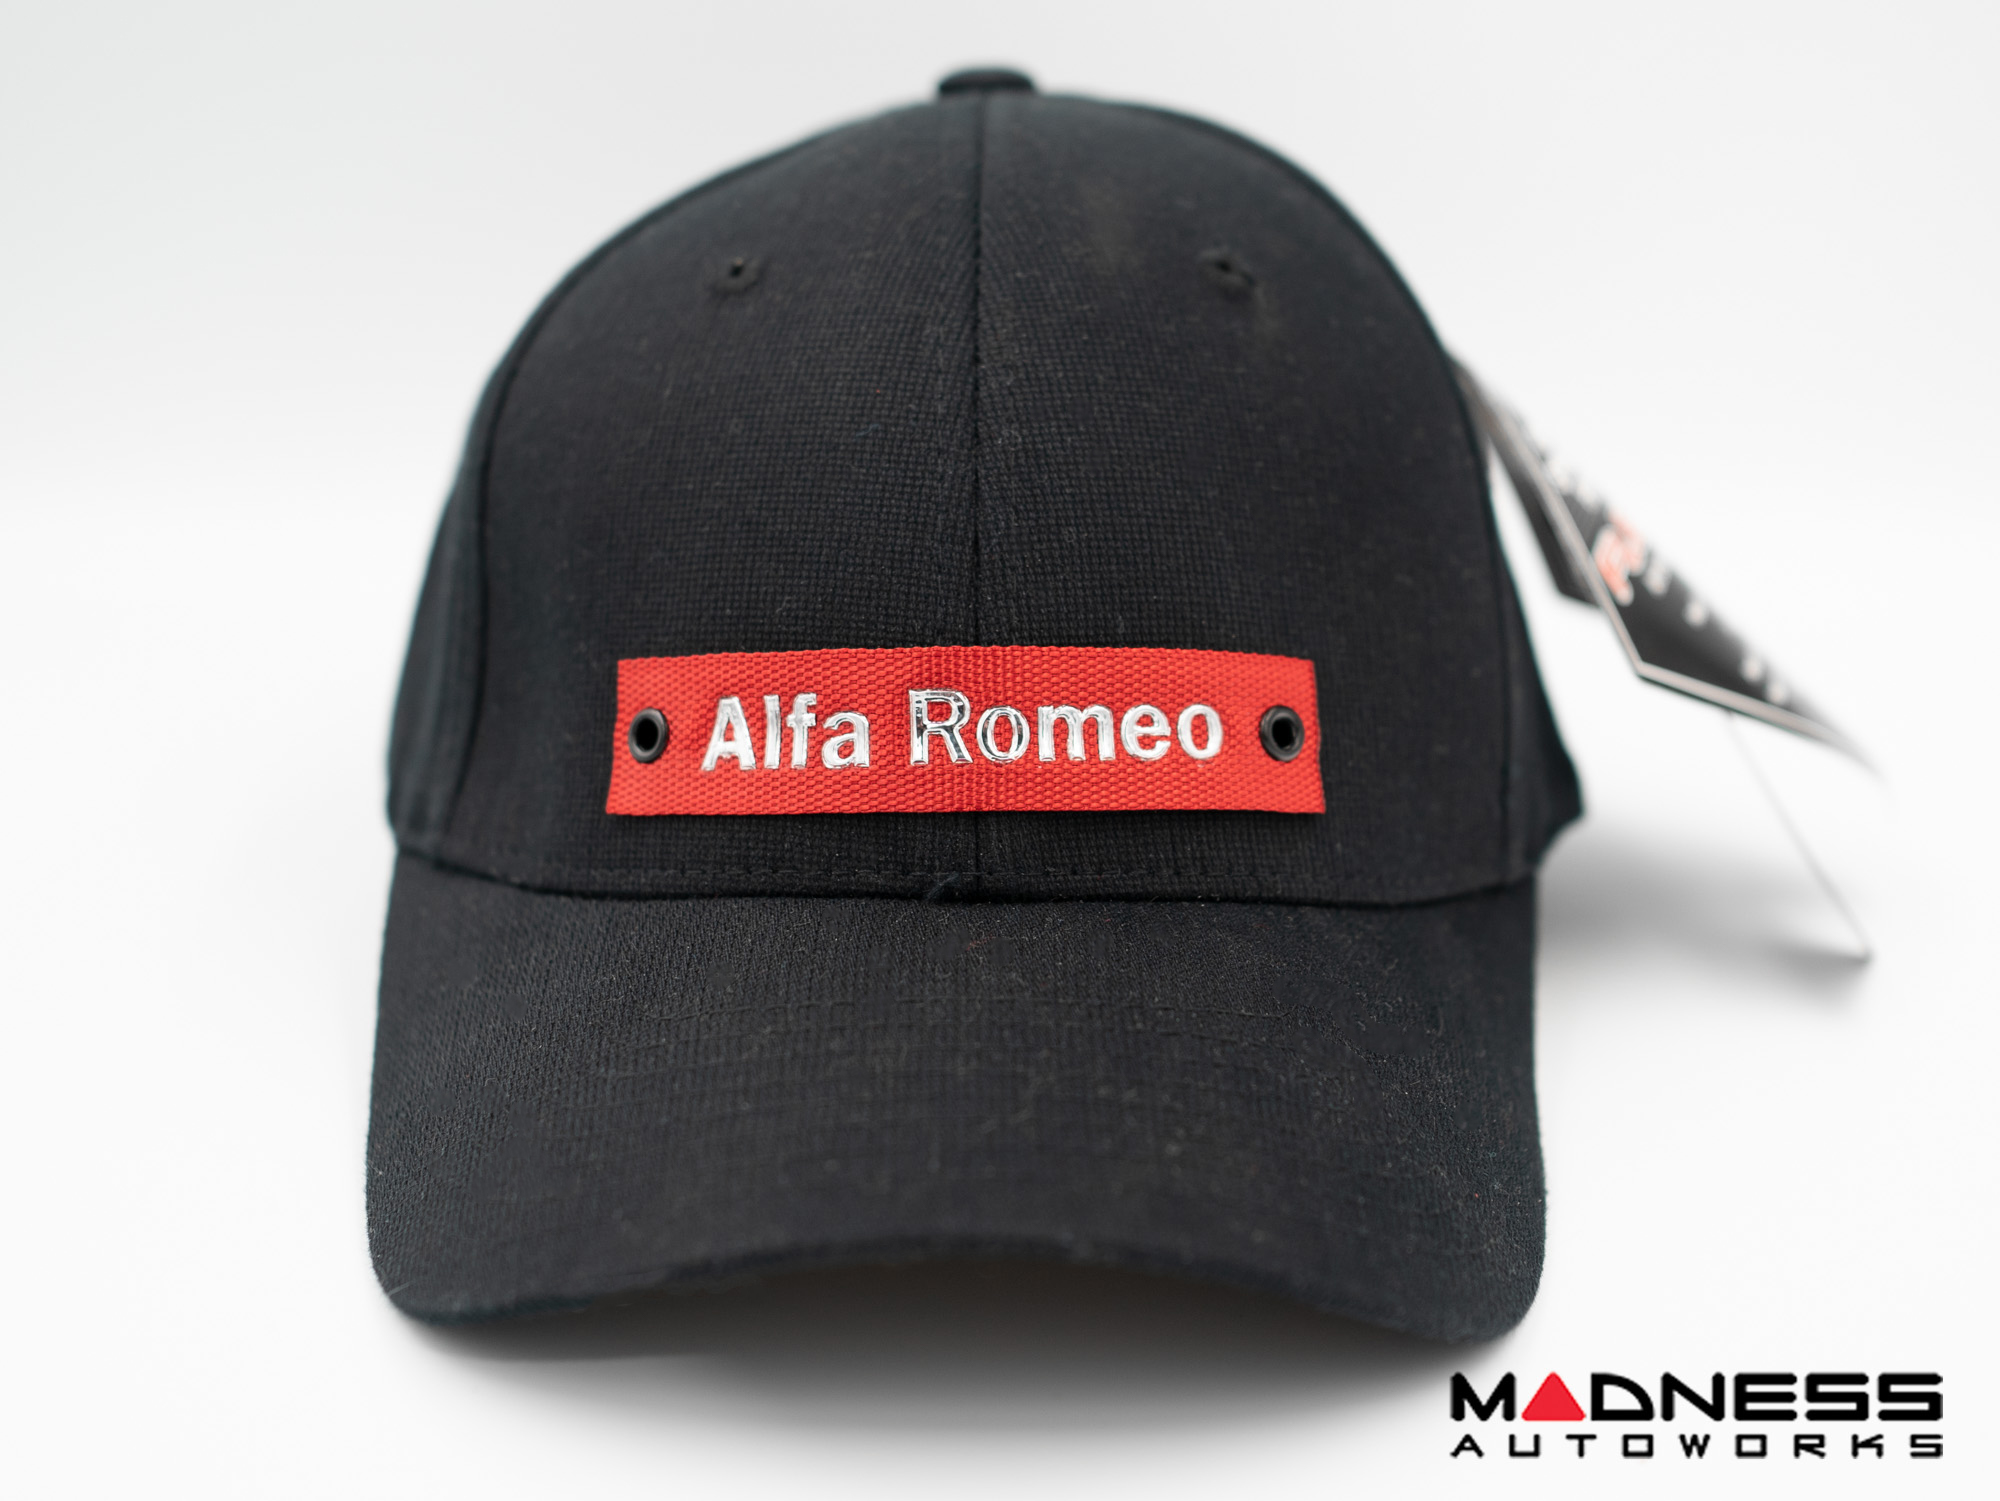 Cap - Alfa Romeo - Black w/ Red Nylon Band + Metallic Alfa Romeo Logo